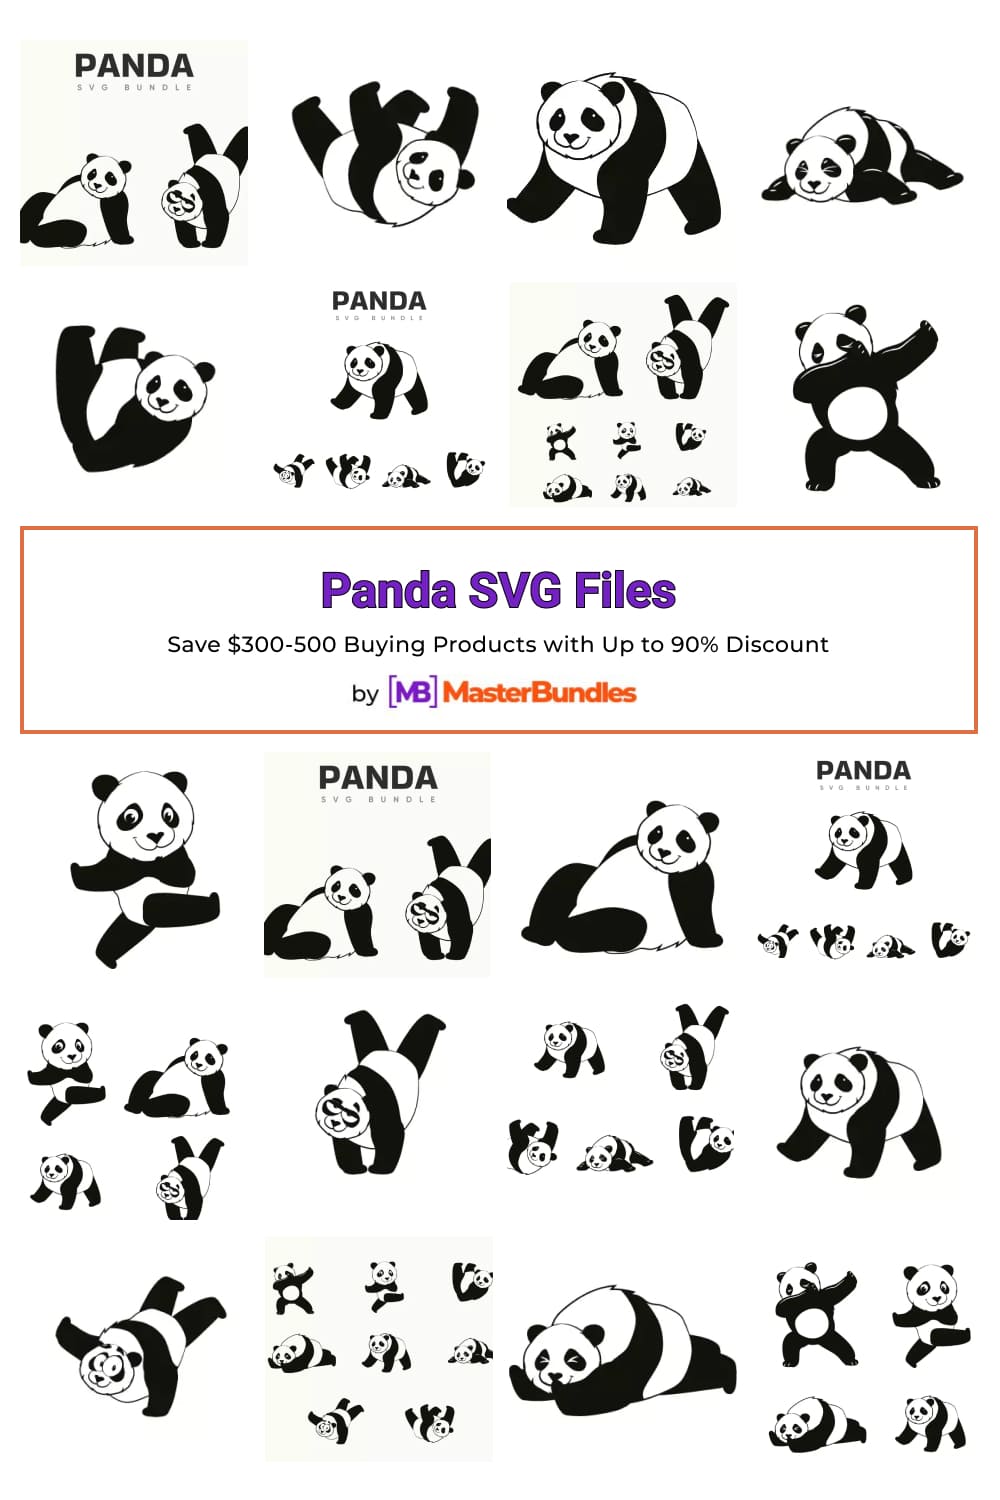 Panda SVG Files Pinterest image.